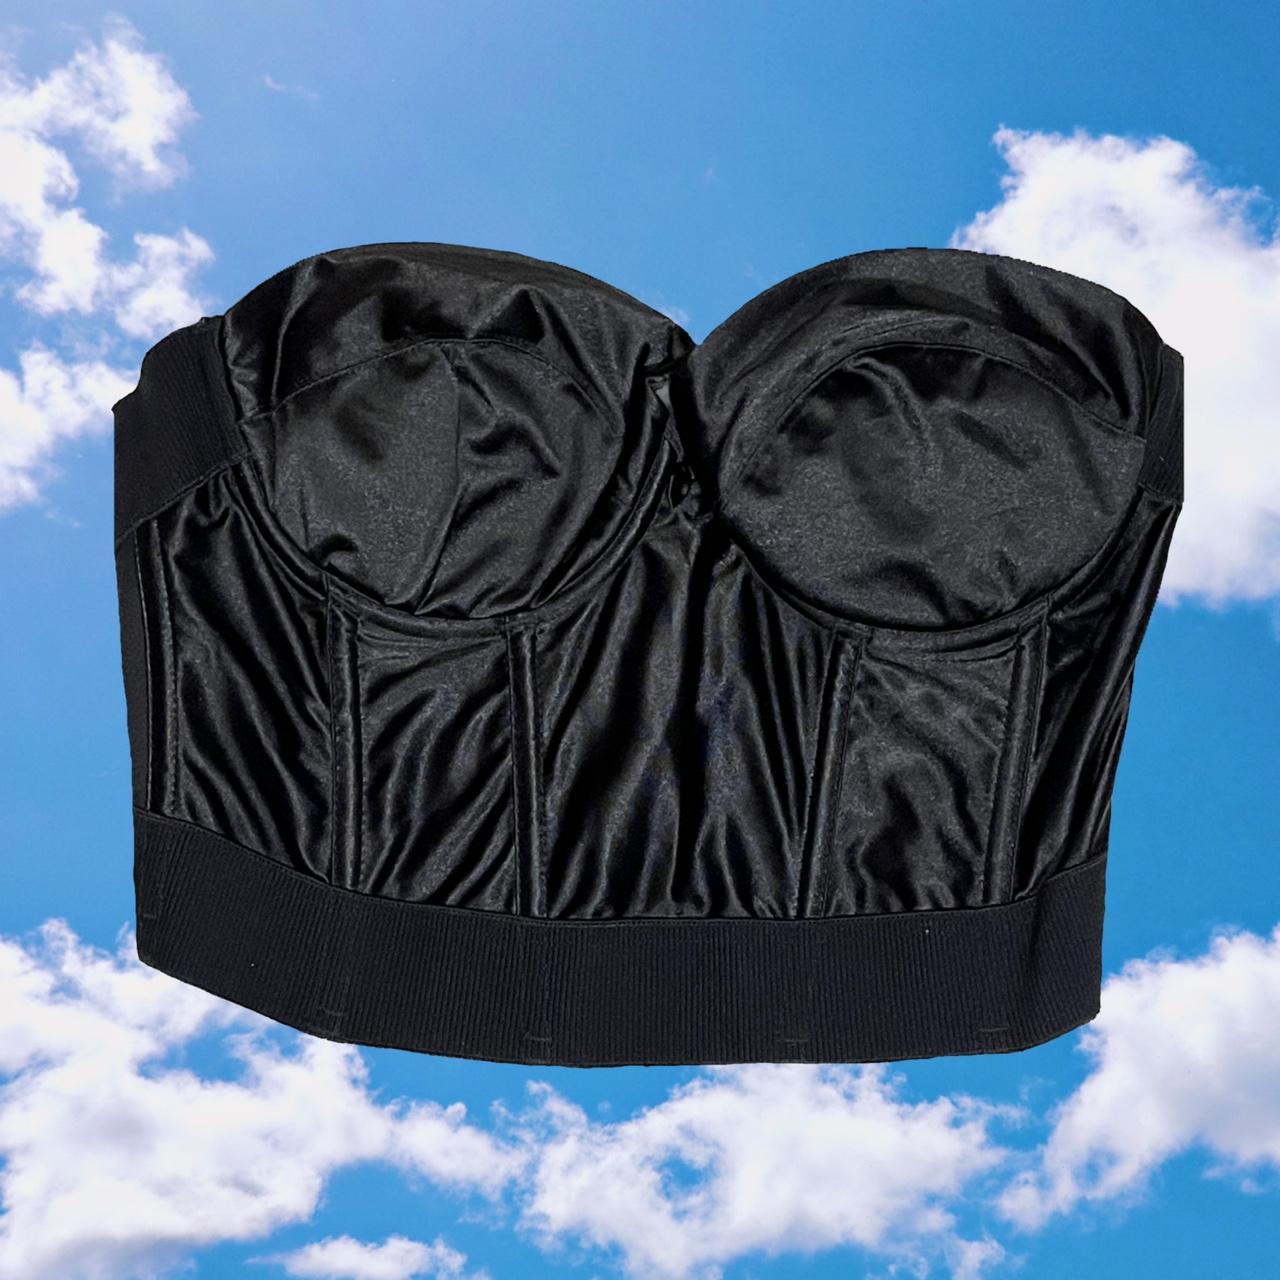 Wonderbra bustier black satin corset, 38 C, 🖤Vintage